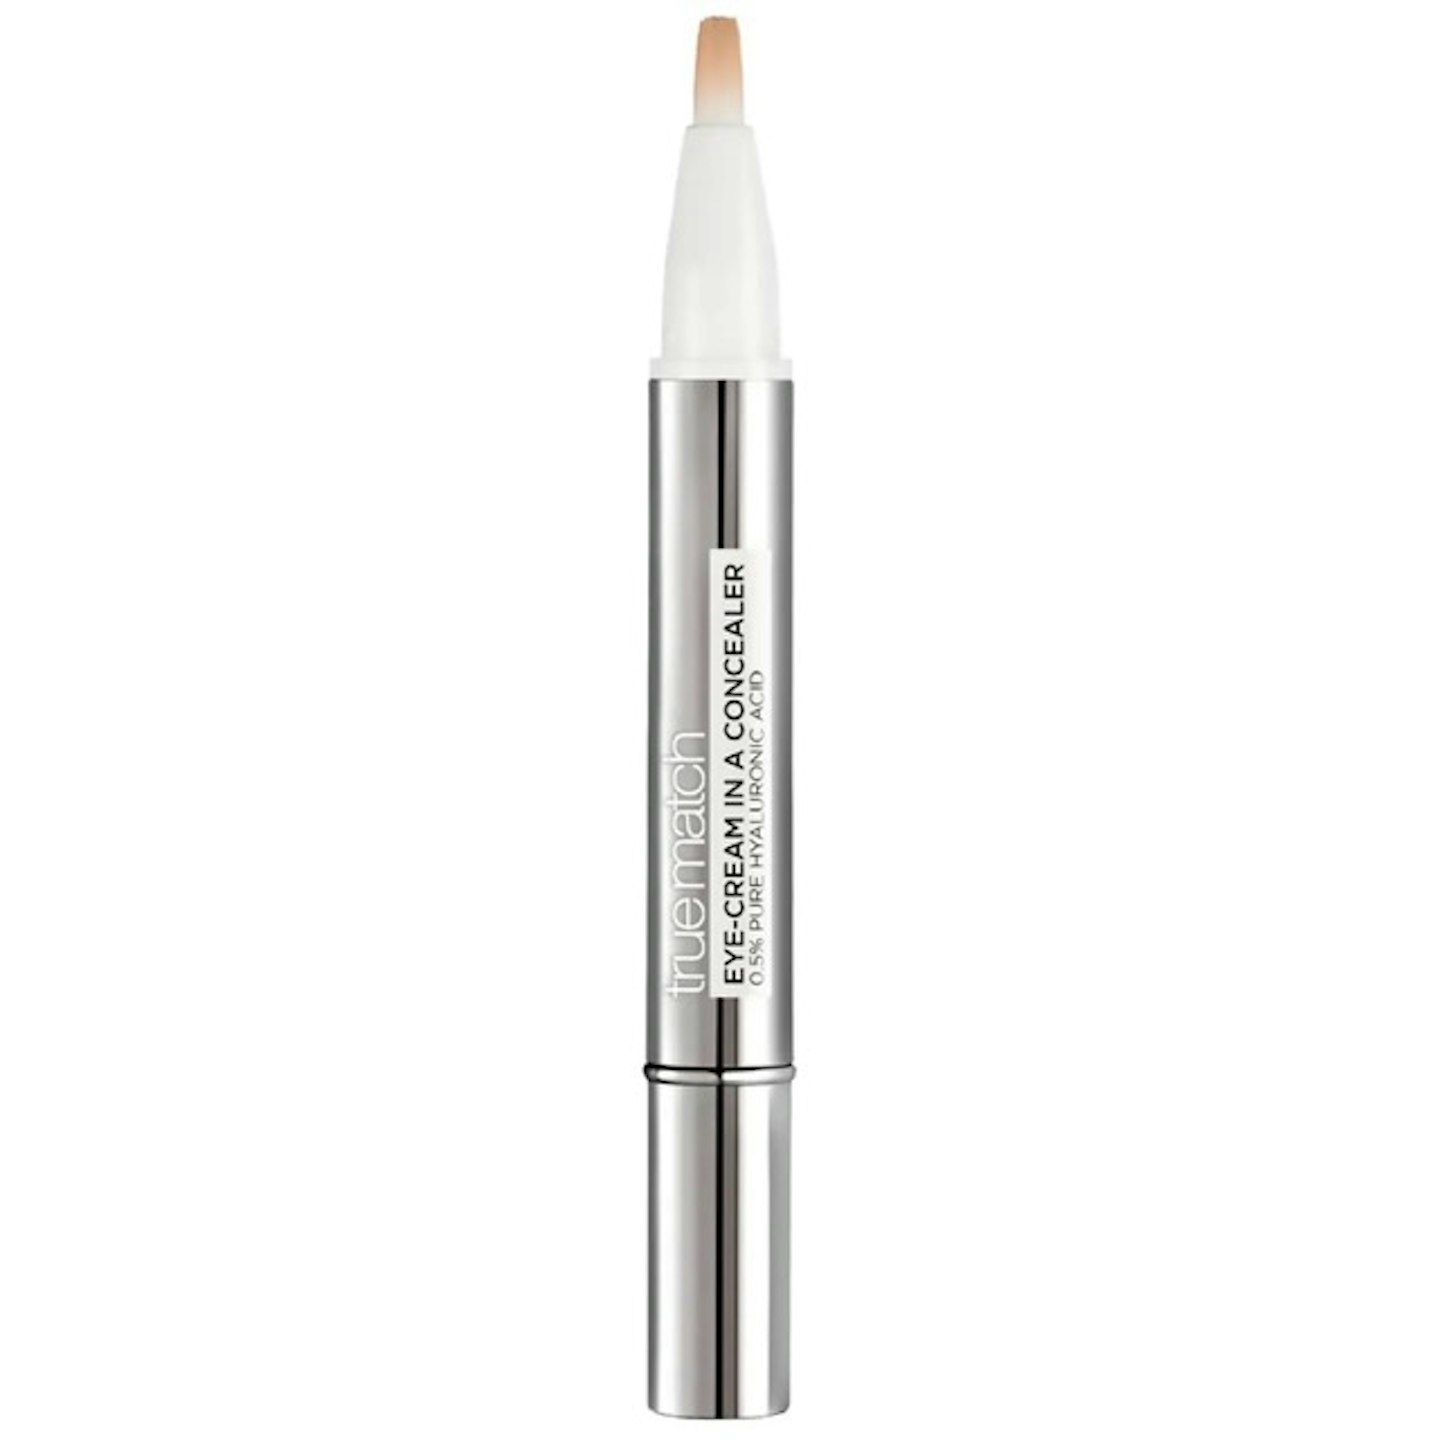 L'Oréal Paris True Match Eye Cream in a Concealer SPF20